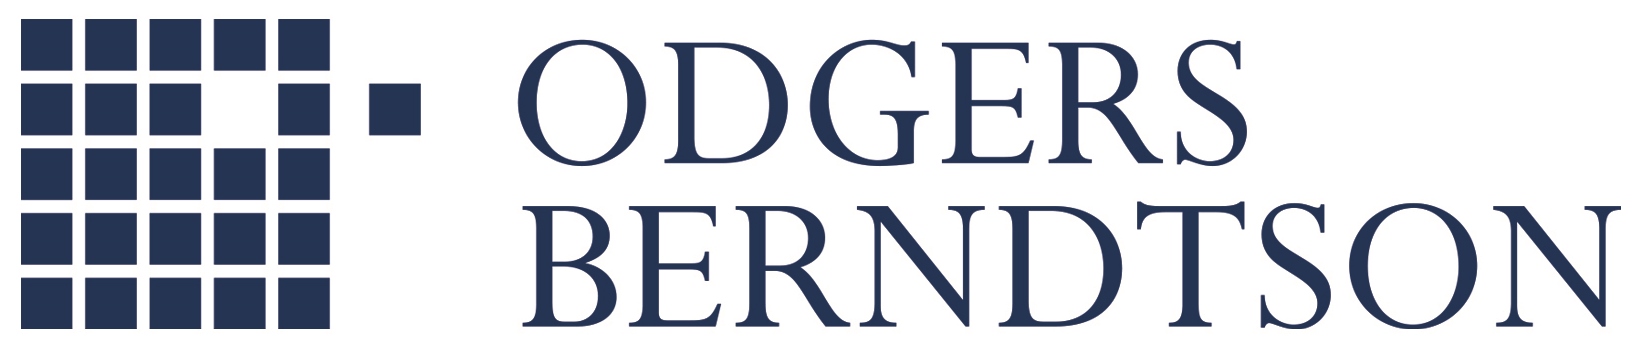 Odgers Berndtson Stacked Logo Blue.jpg